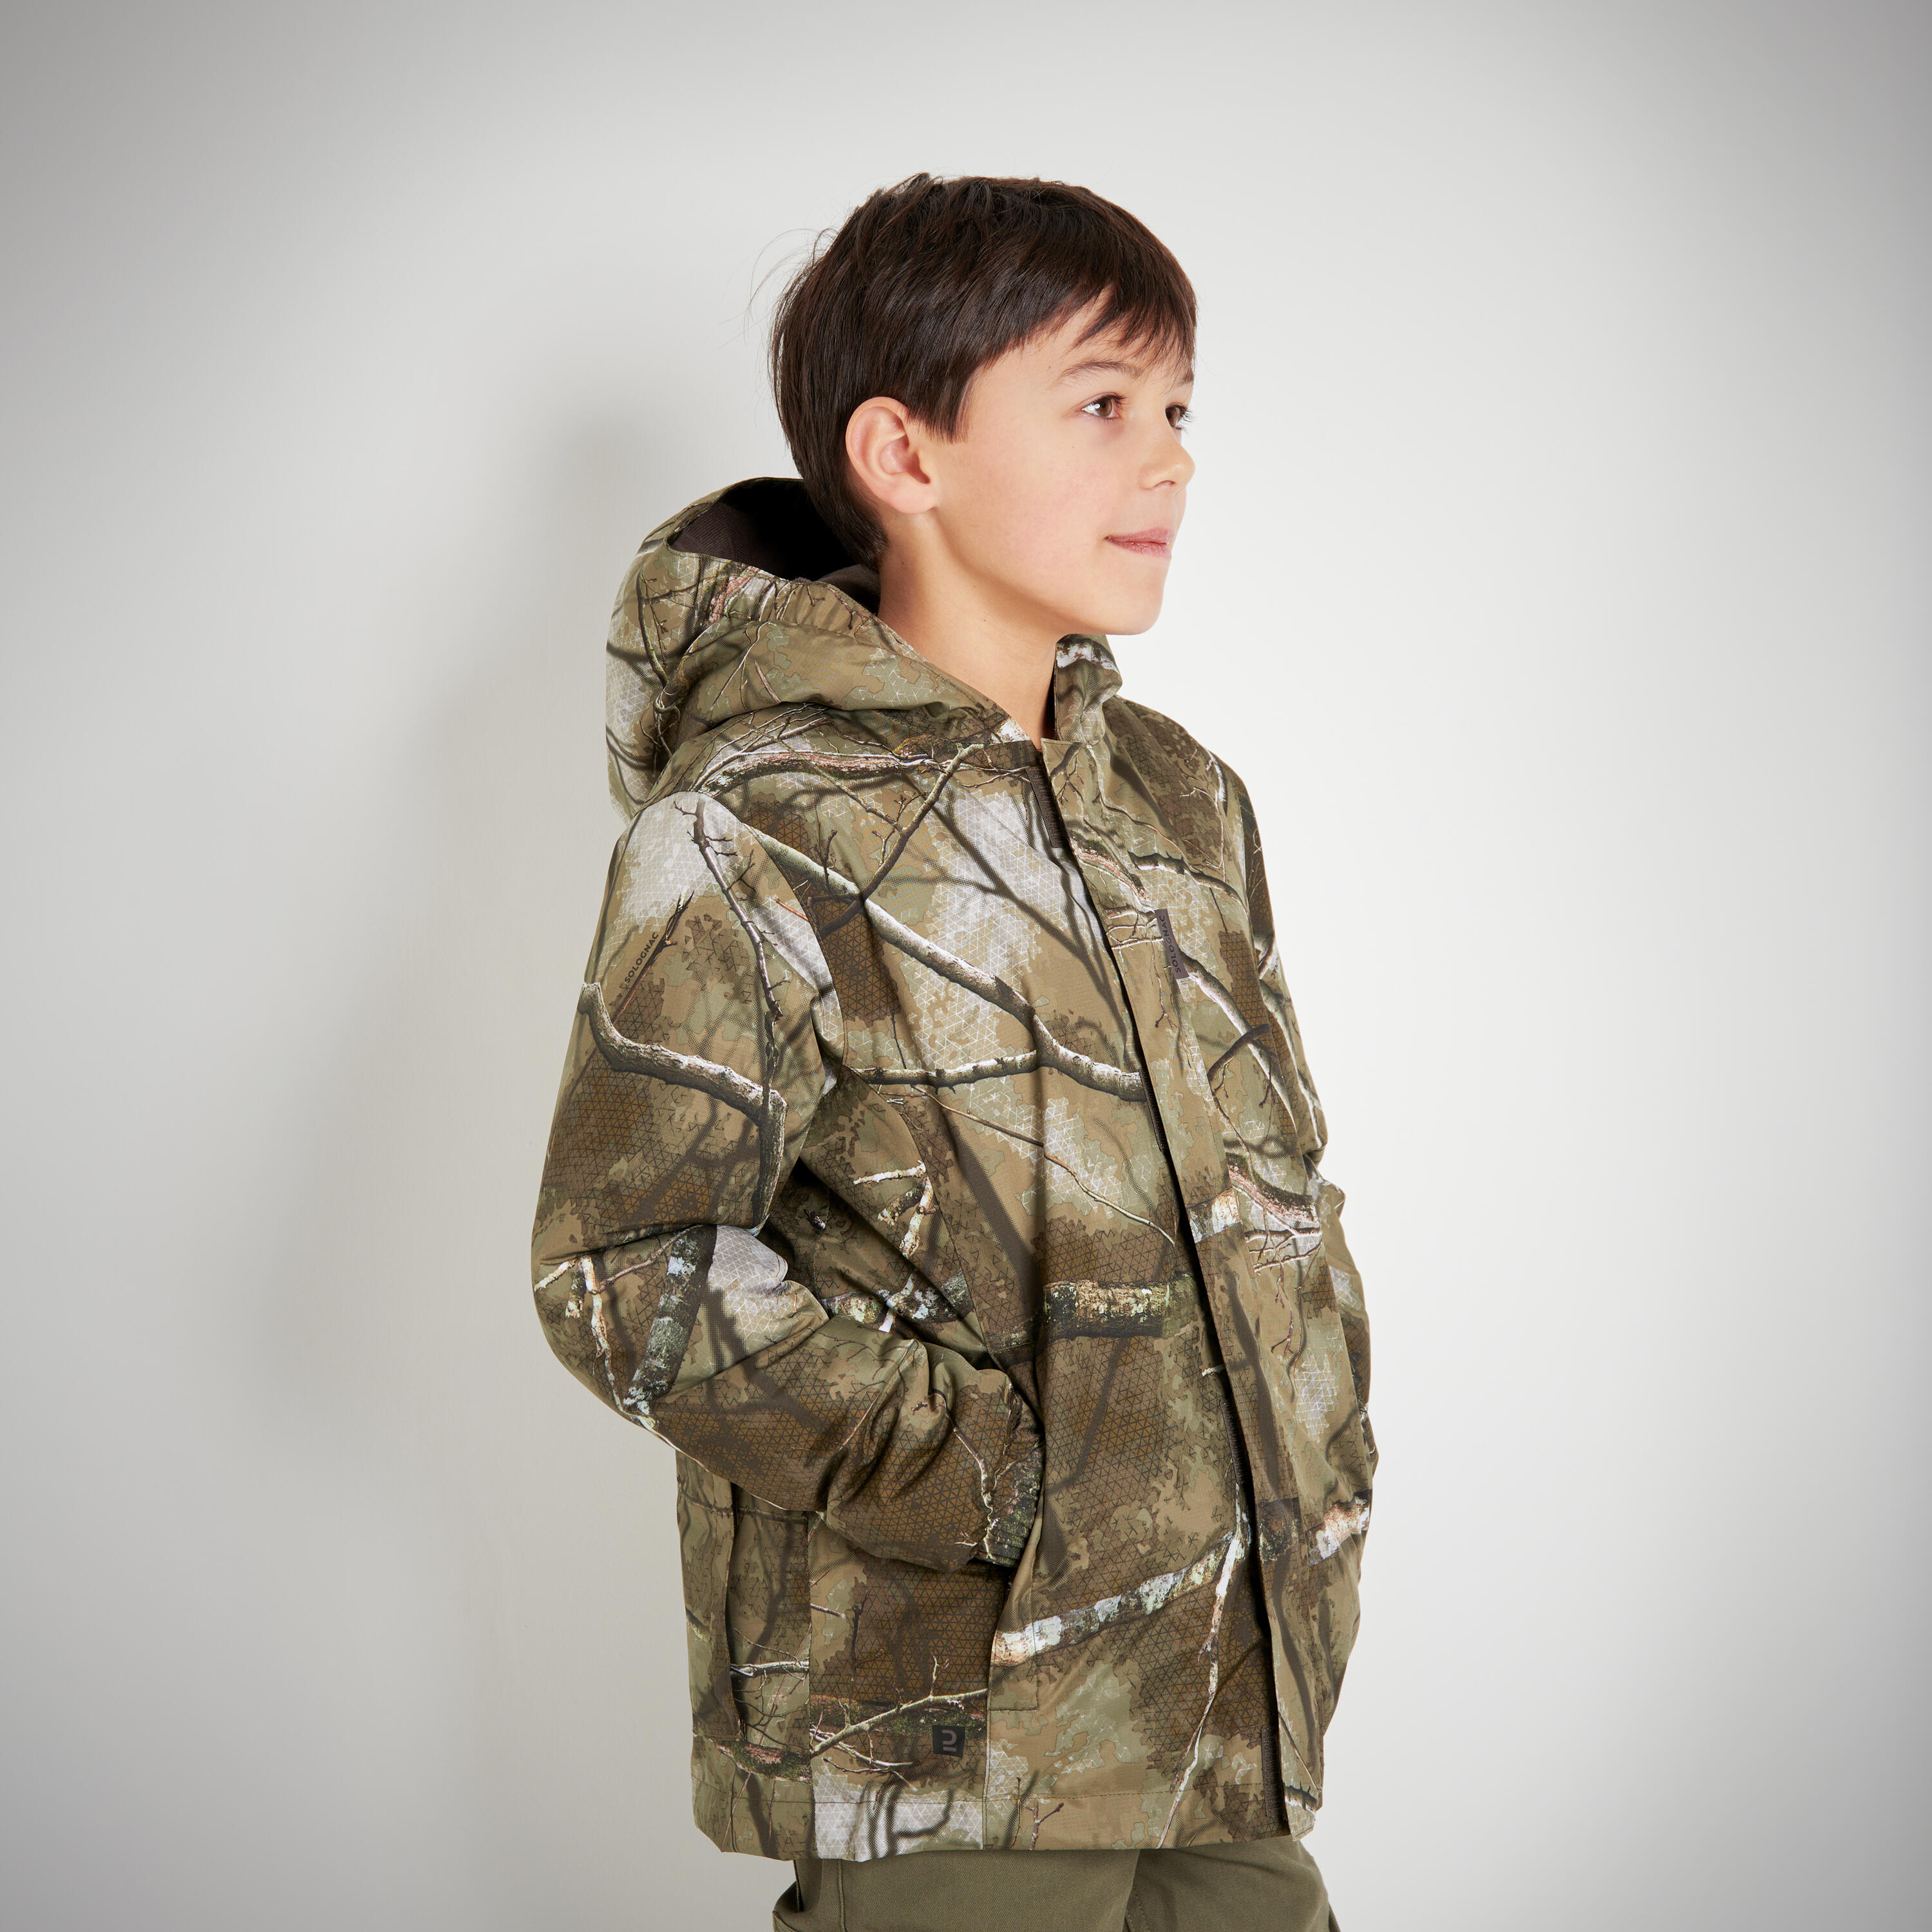 DECATHLON KIPSTA boys black hooded lightweight jacket windbreaker Size 14  Years | eBay